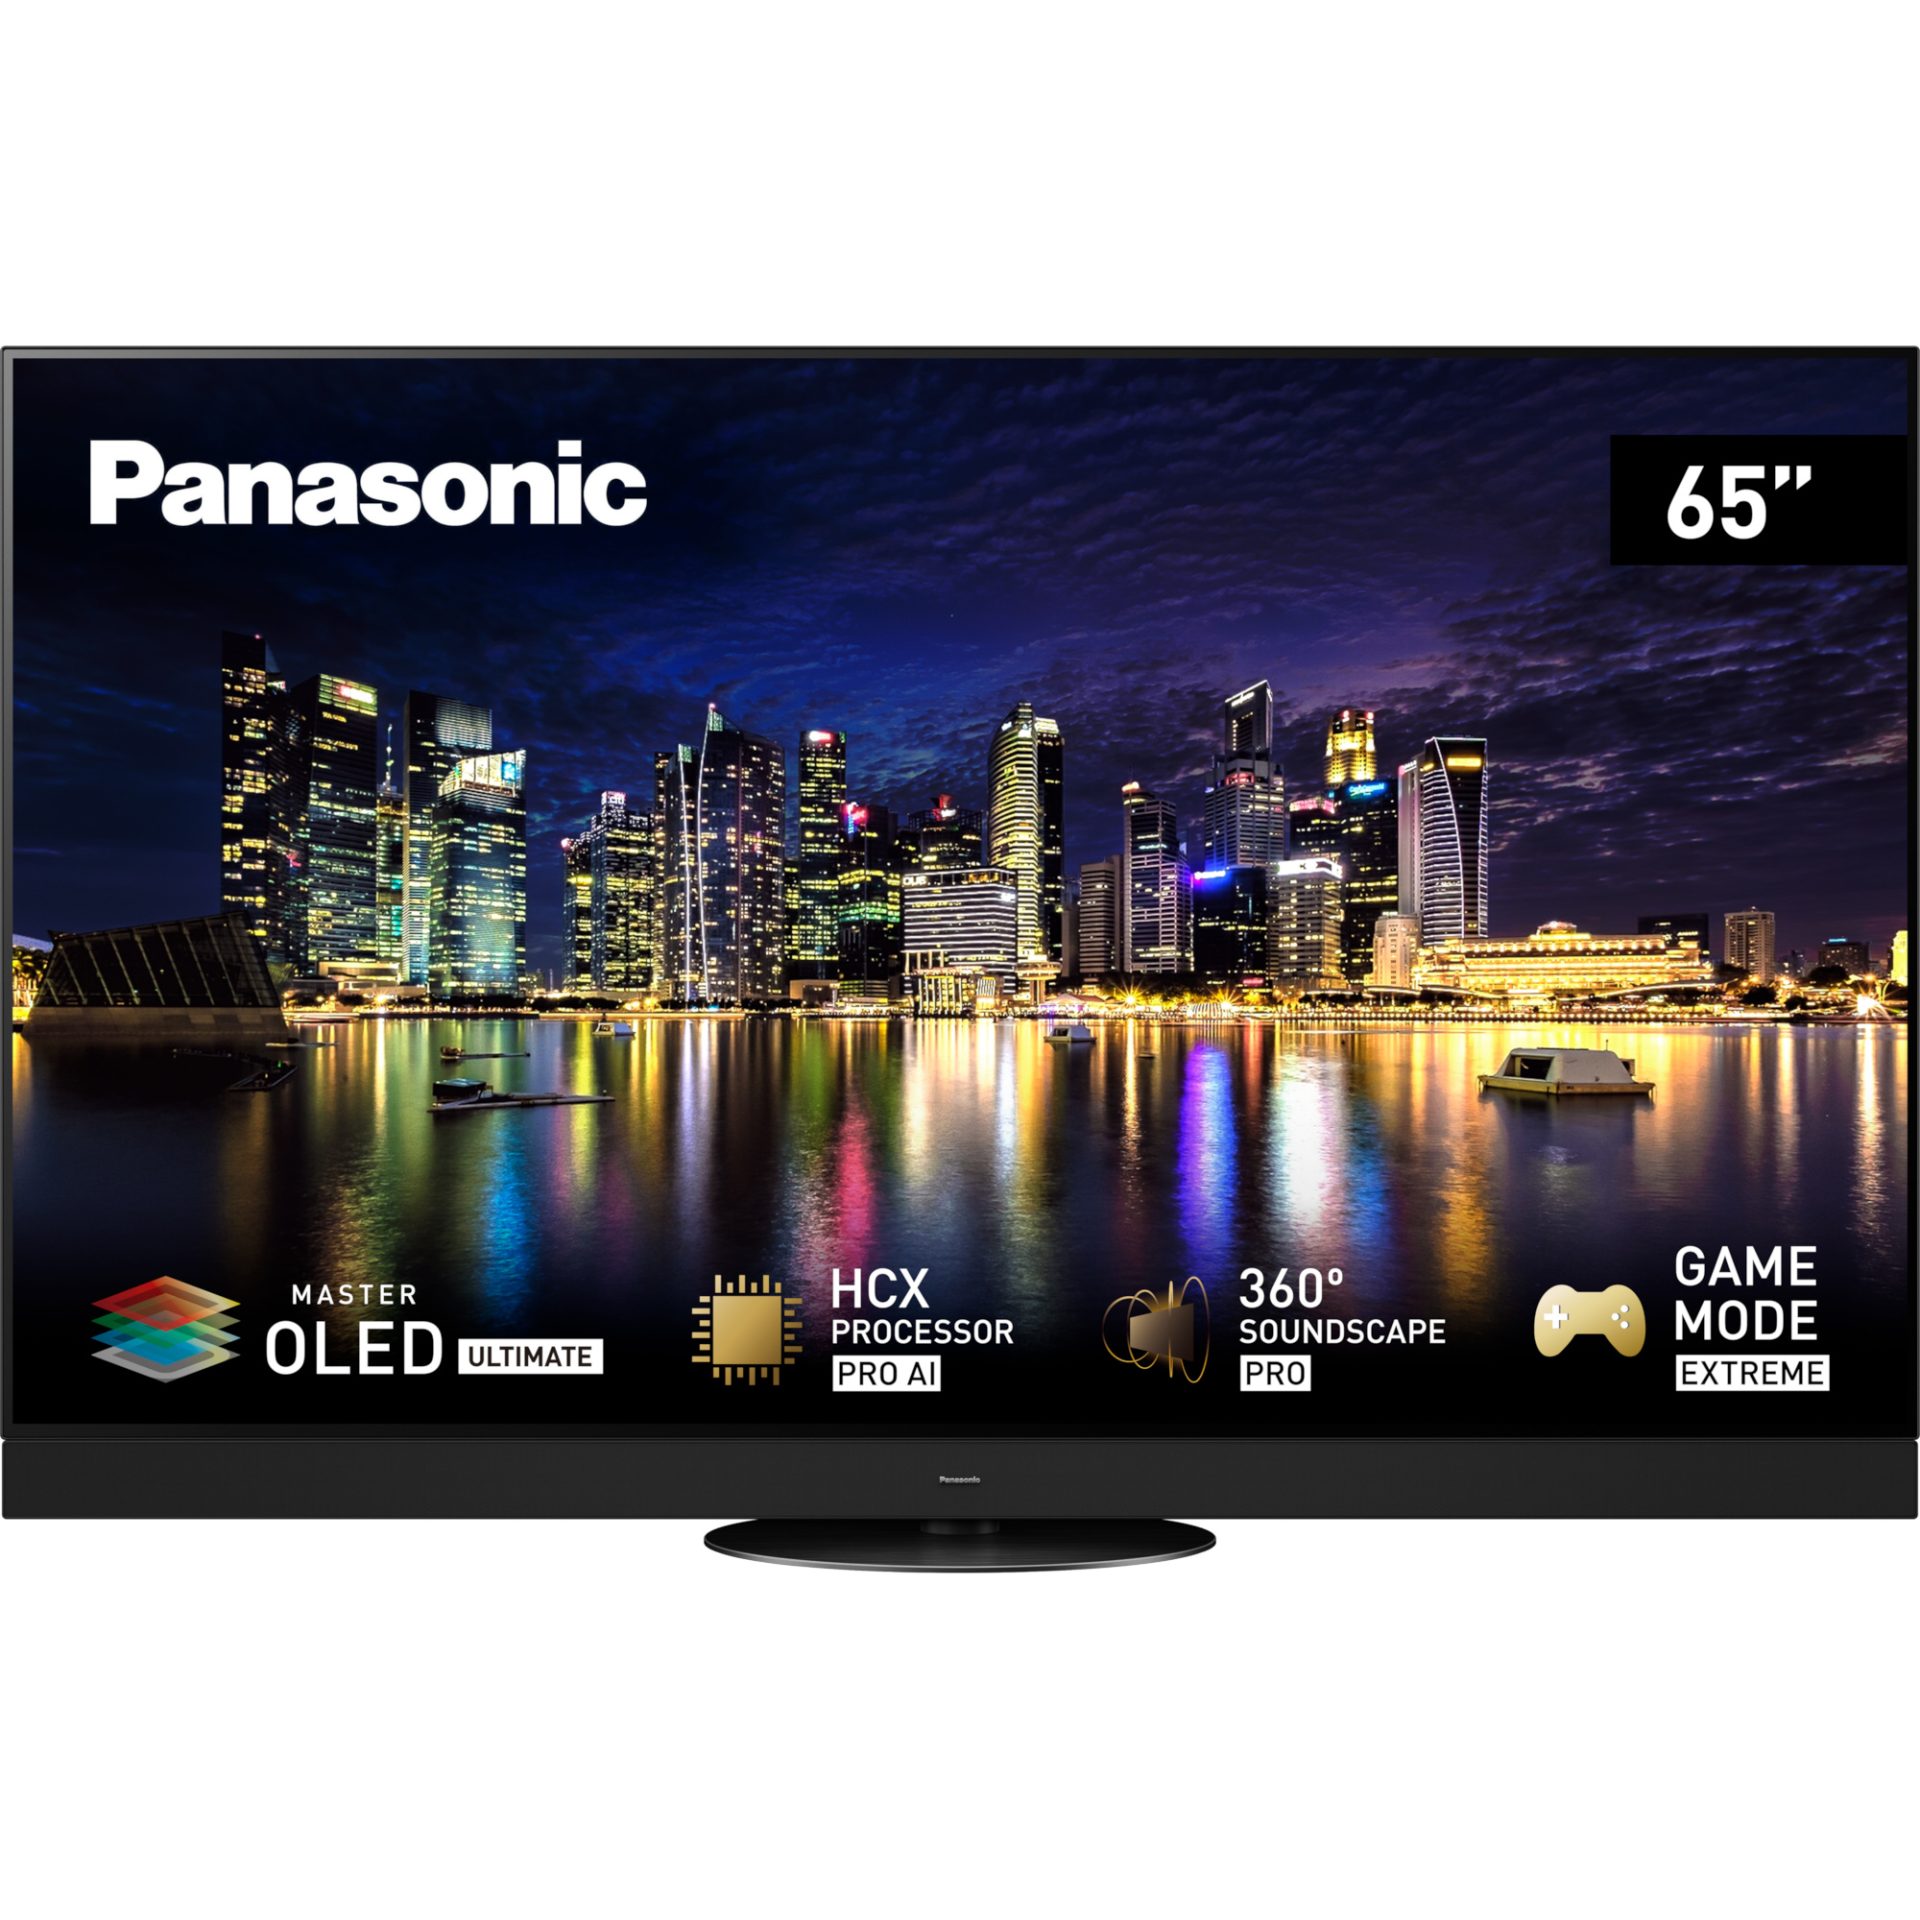 Zdjęcia - Telewizor Panasonic TX-65MZ2000  OLED Smart TV 4K HDR 65" (DVB-T2/HEVC, pro 